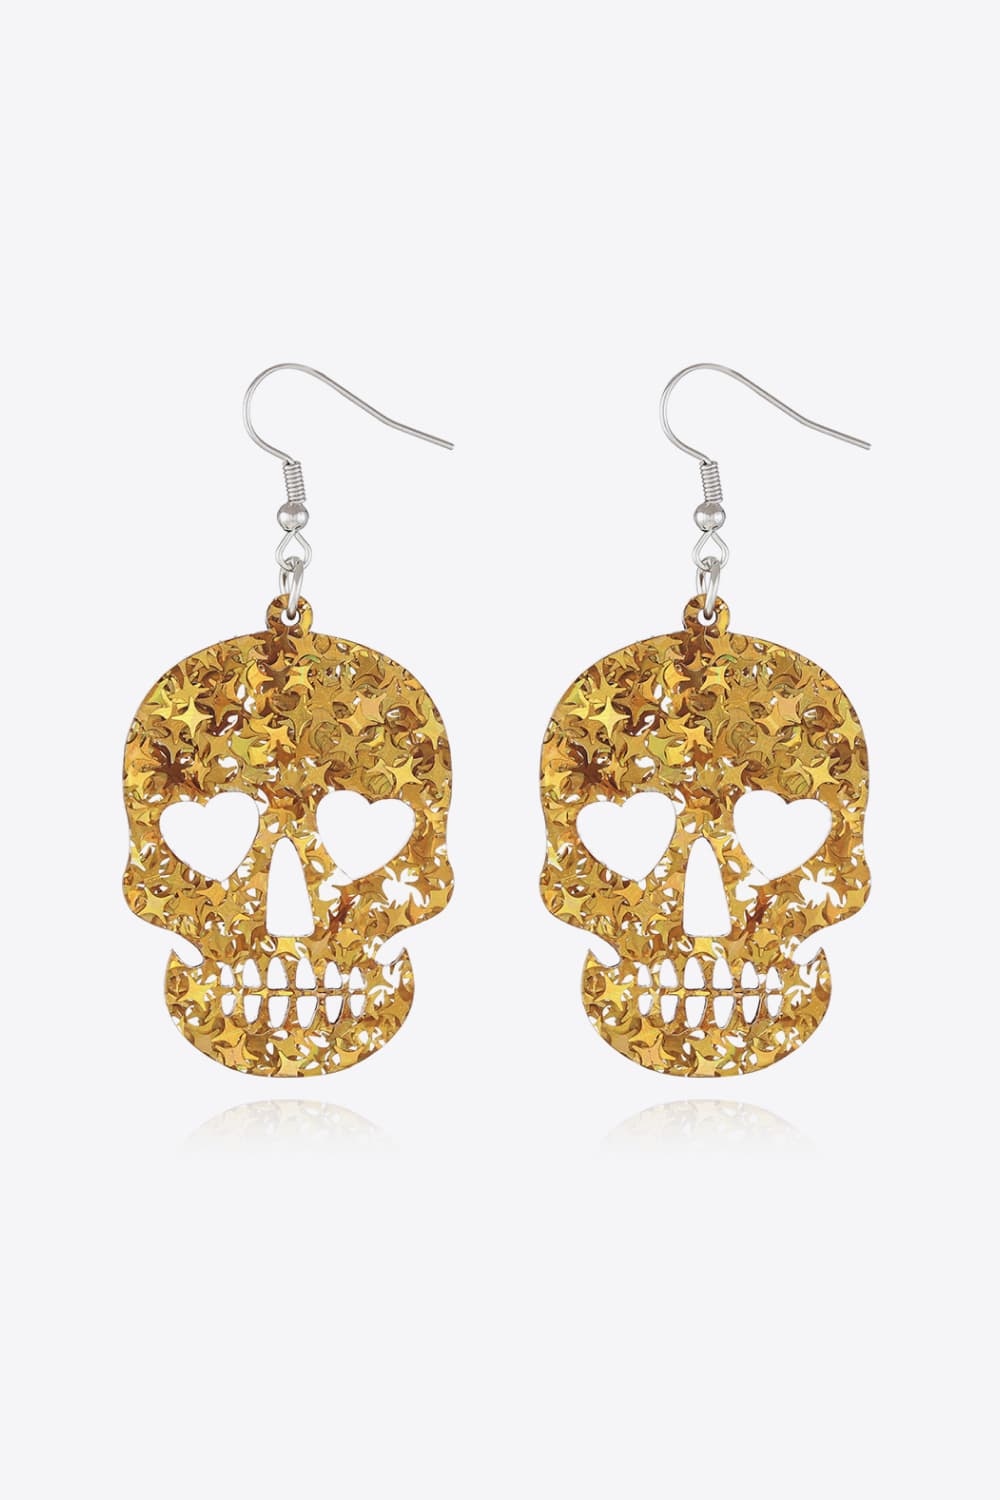 Acrylic Skull Drop Earrings - Global Village Kailua Boutique